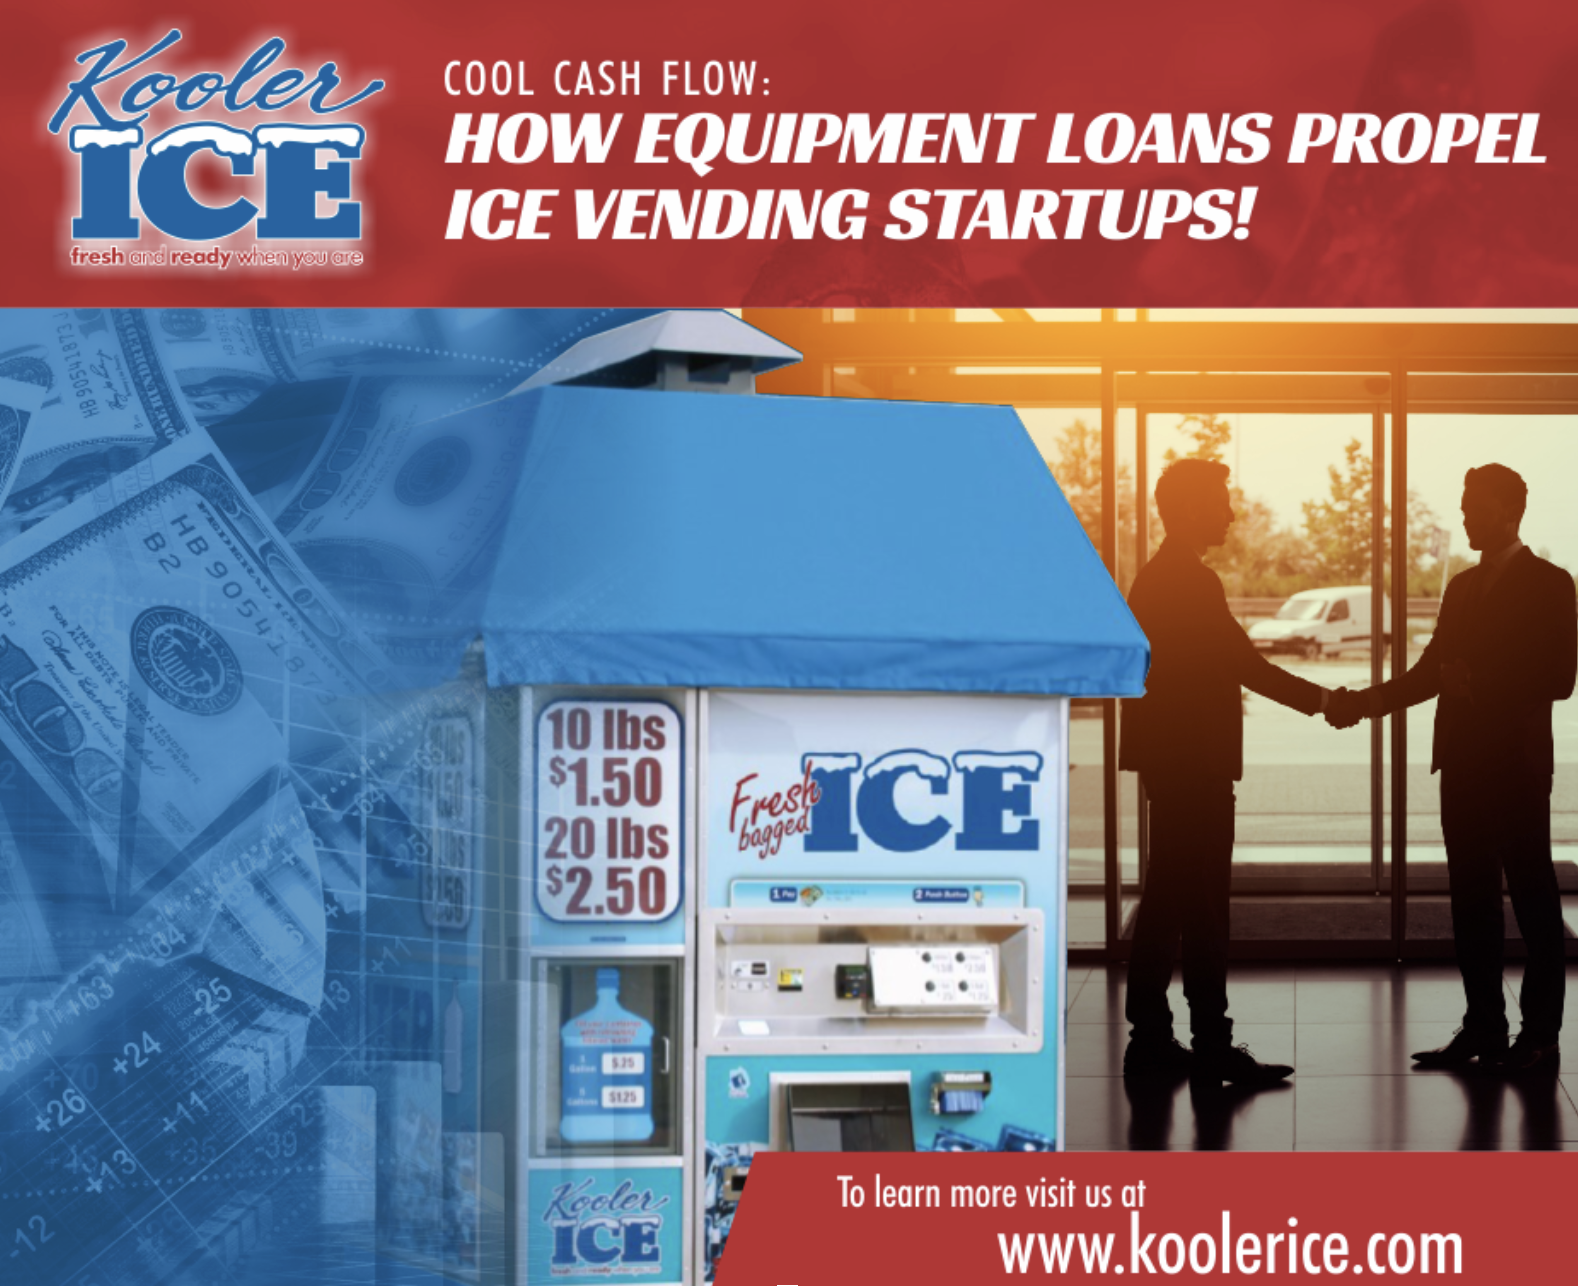 Financing Options for Kooler Ice Equipment